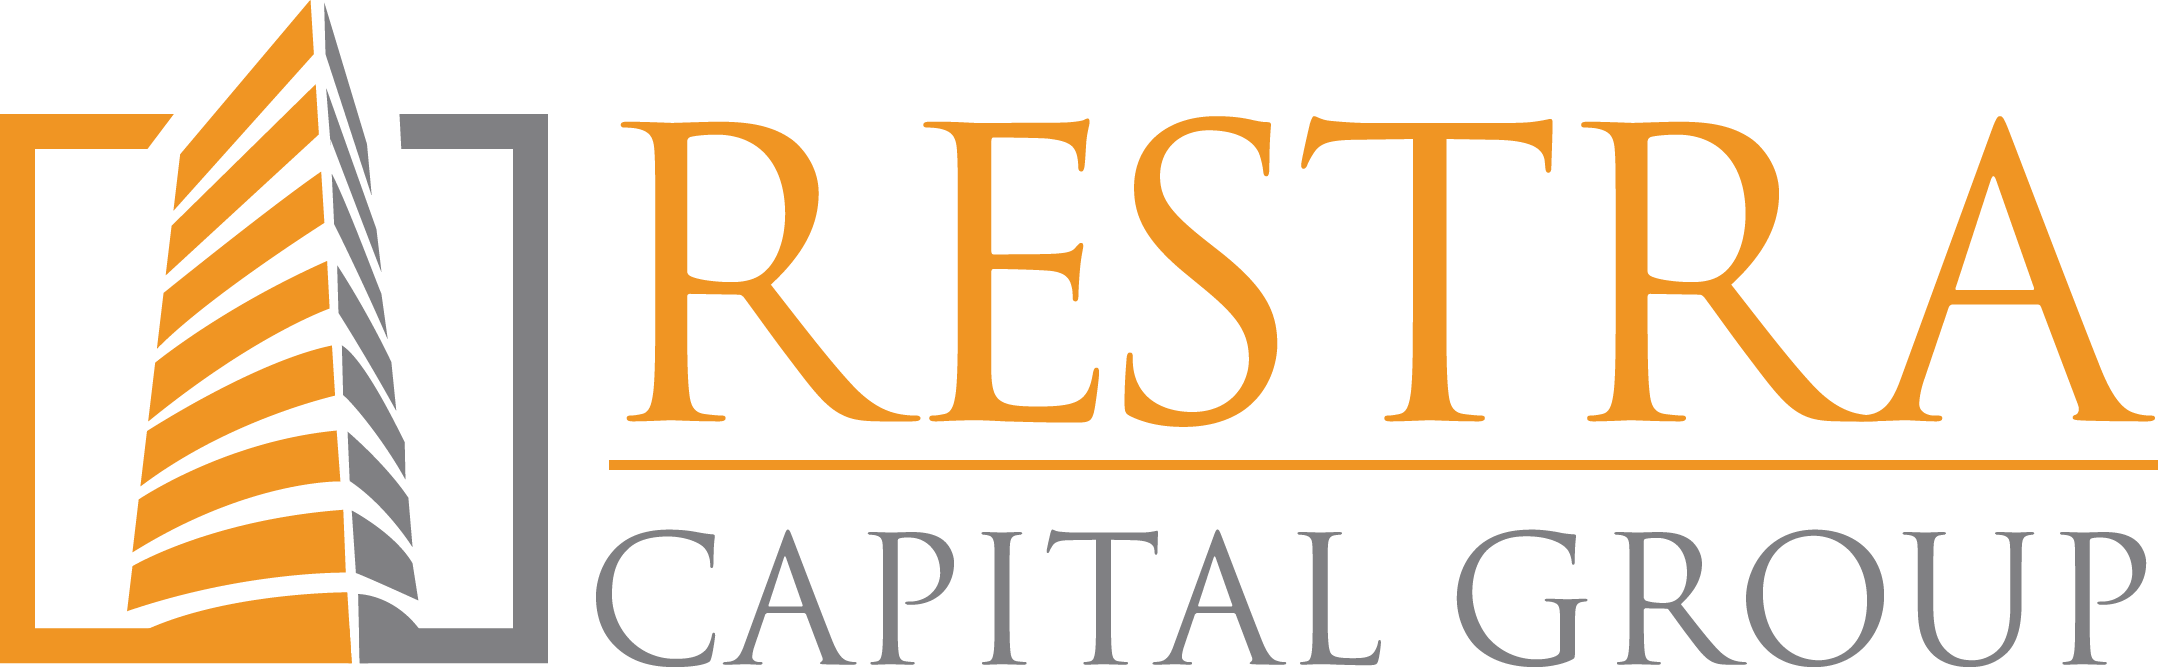 Restra Capital Group  logo